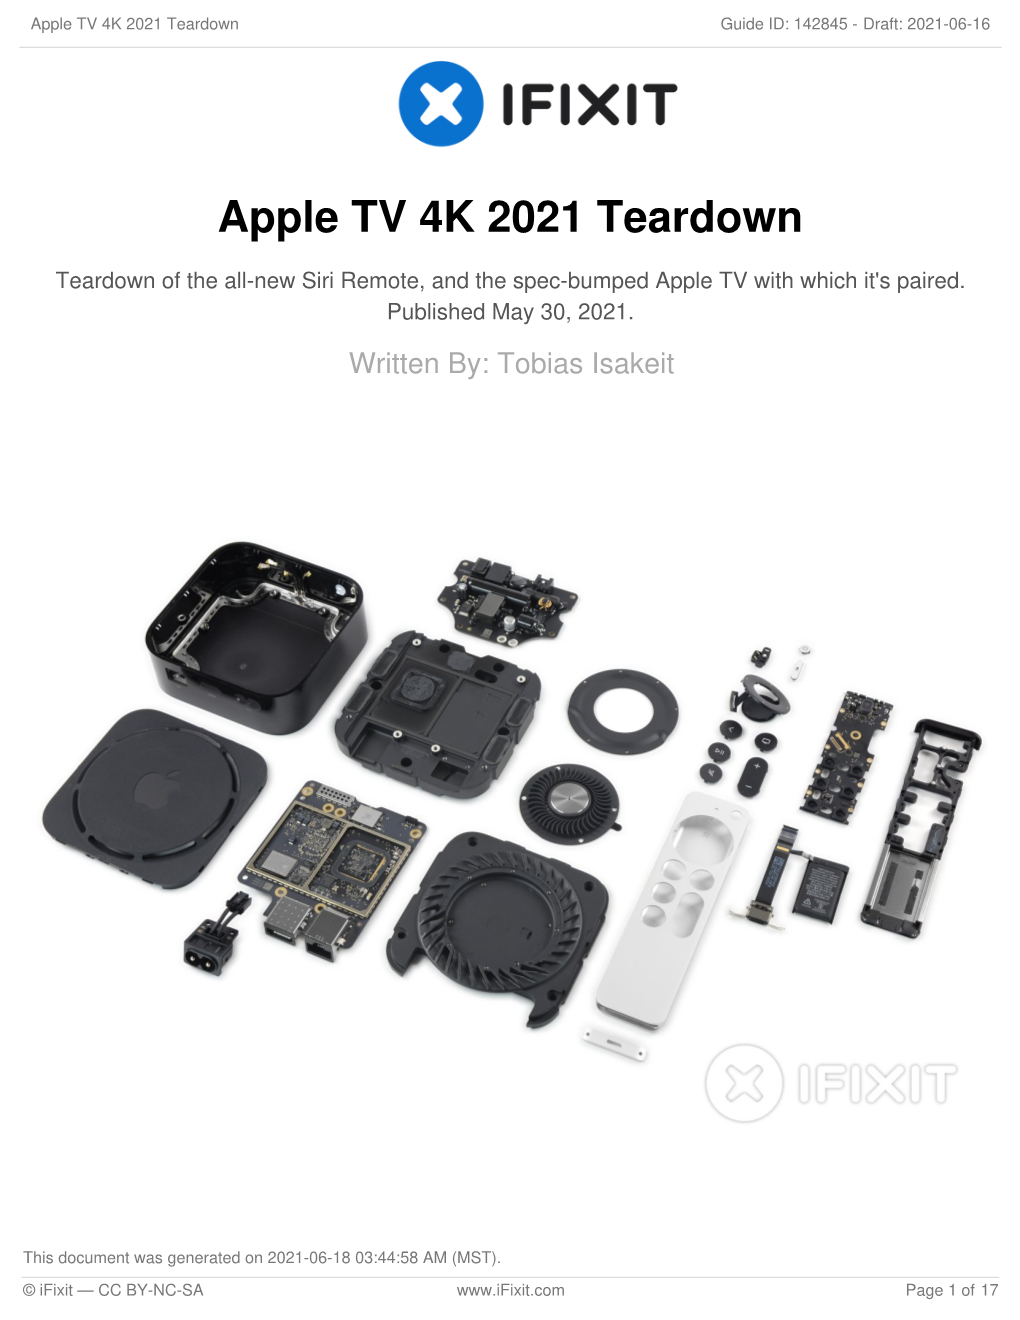 Apple TV 4K 2021 Teardown Guide ID: 142845 - Draft: 2021-06-16